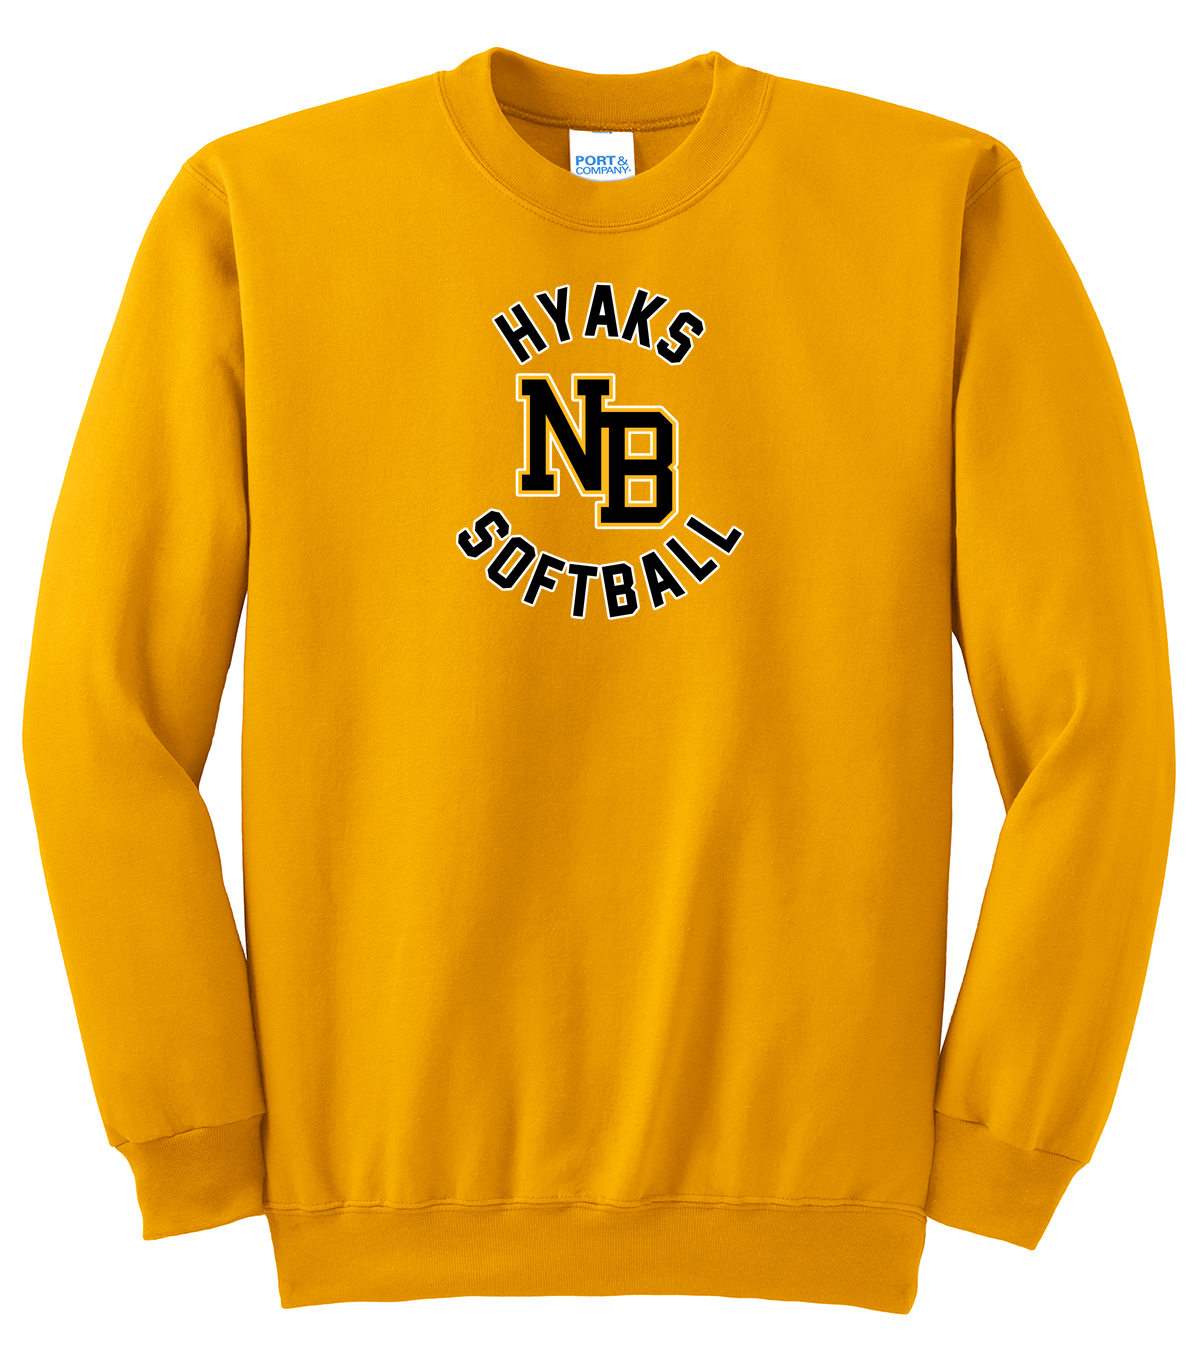 North Beach Softball Crew Neck Sweater